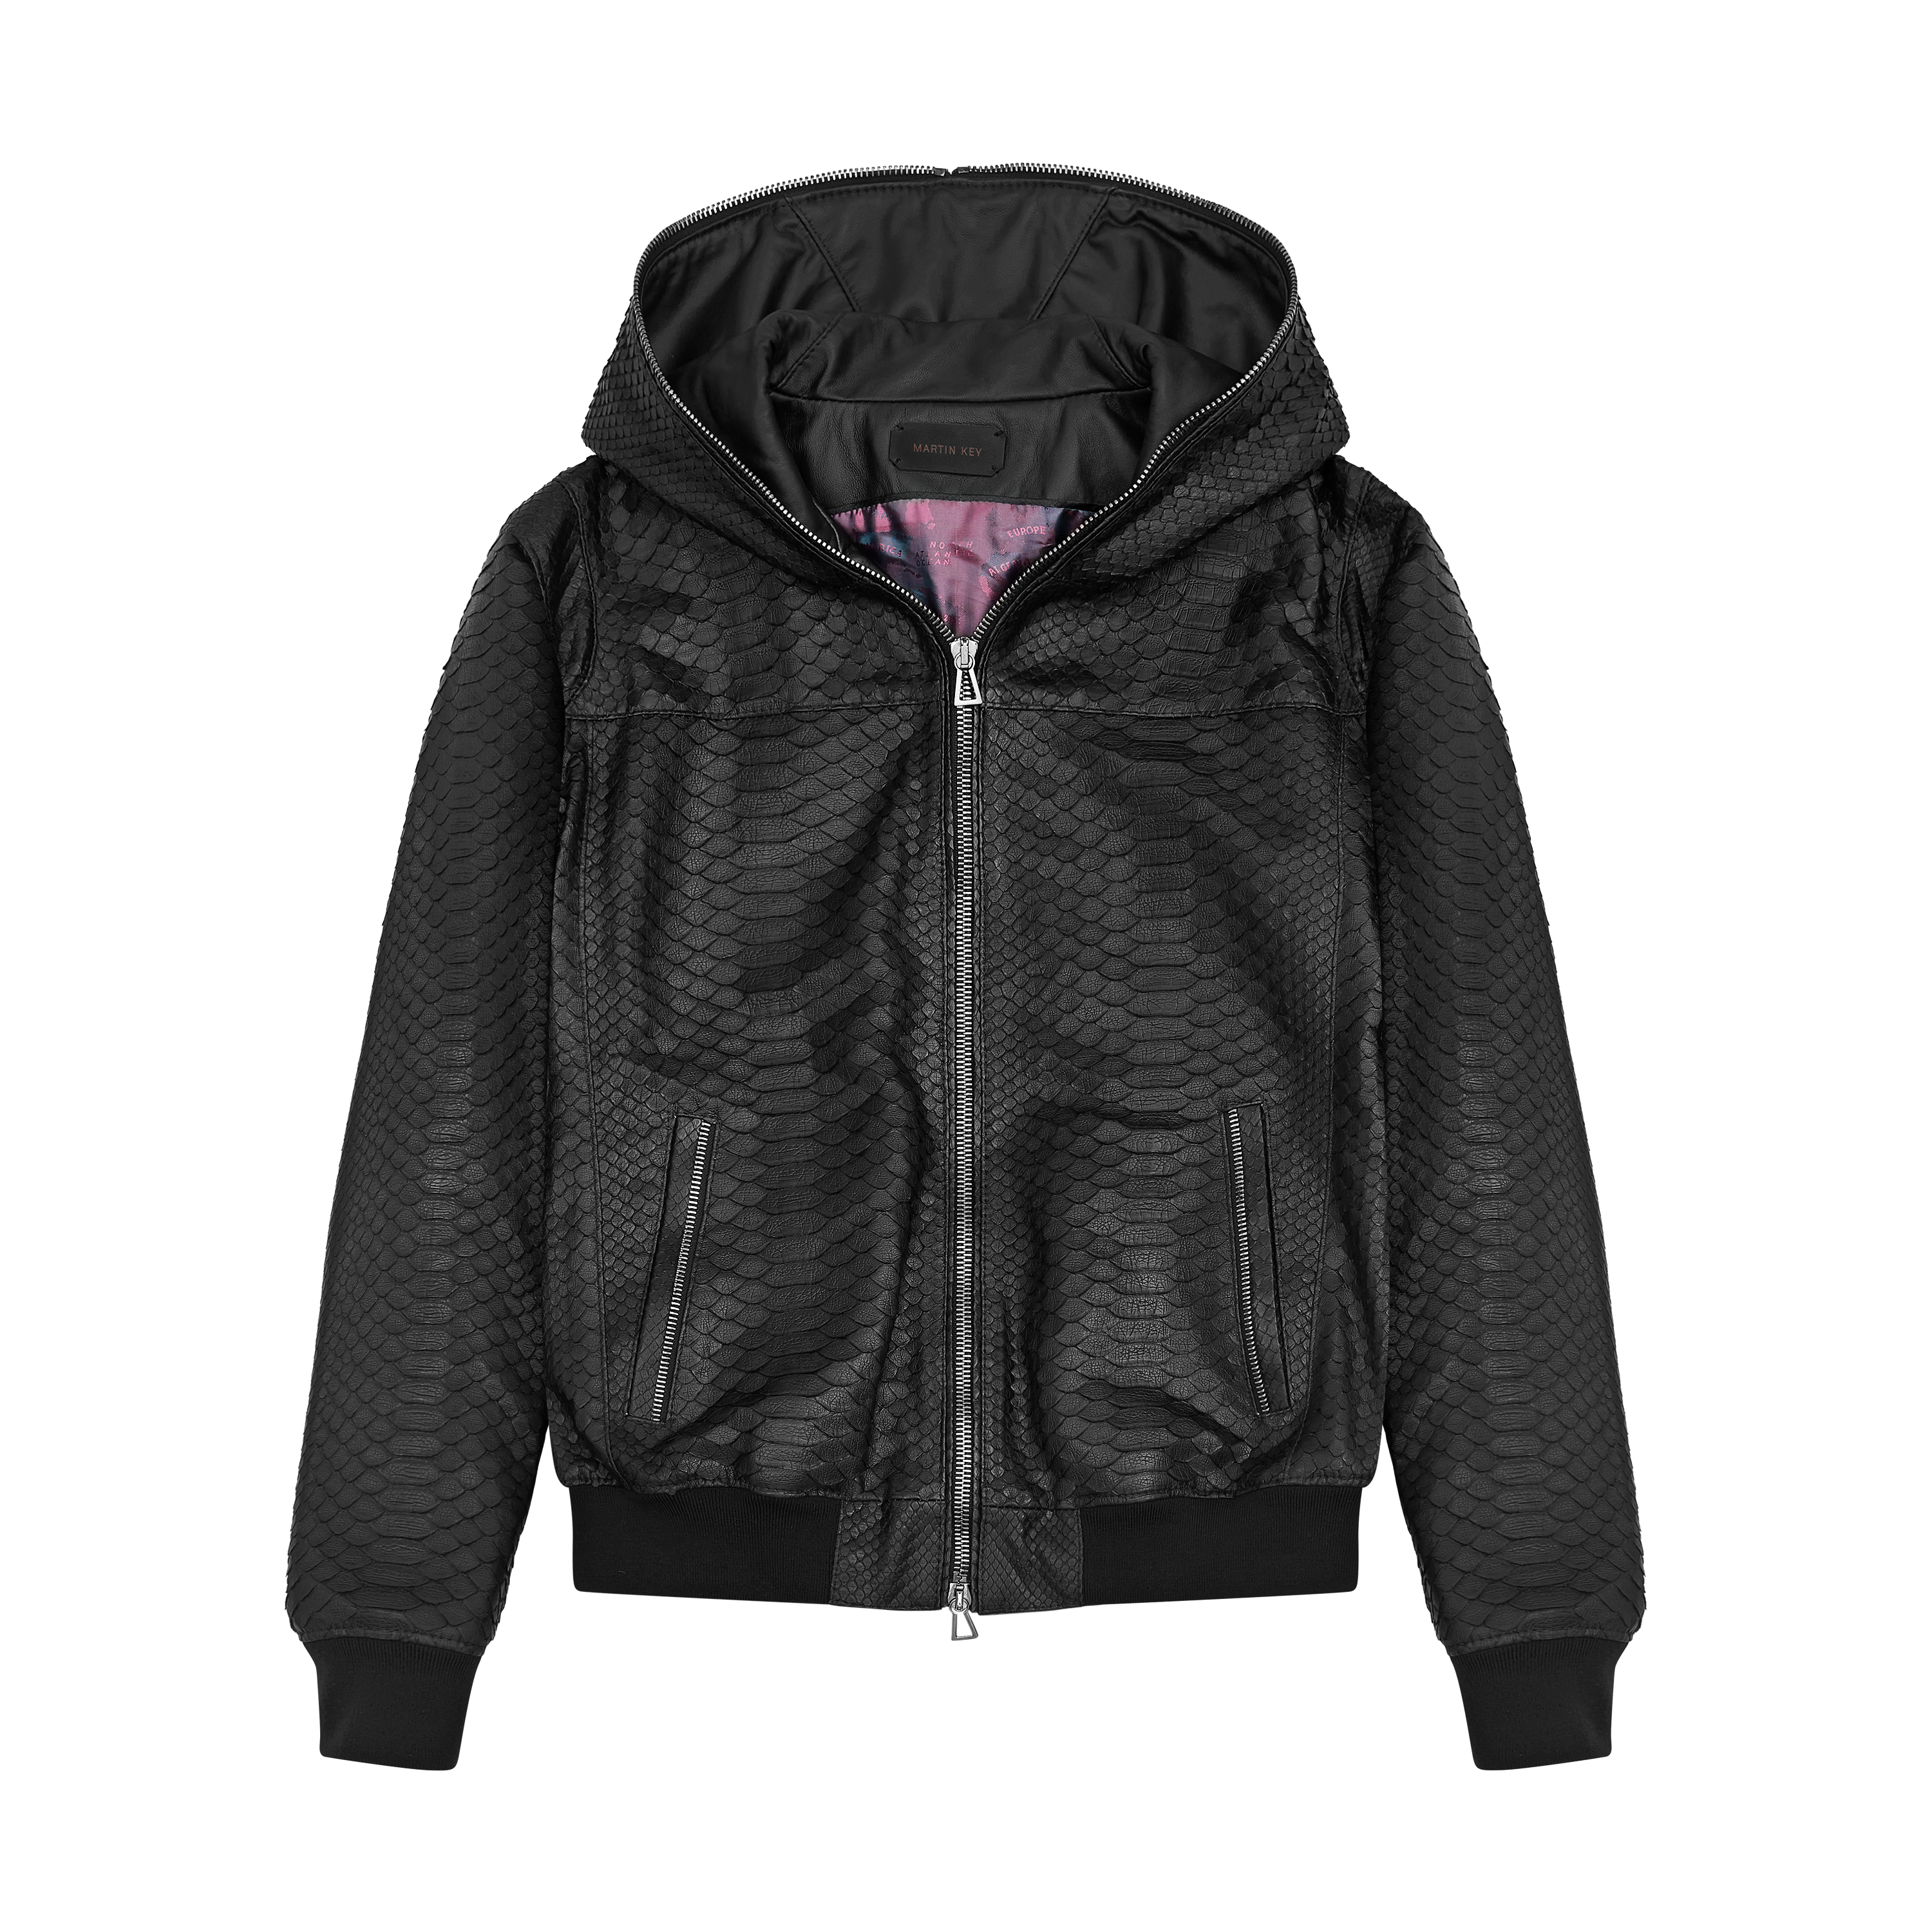 Leather jacket - Berlin by Martin Key